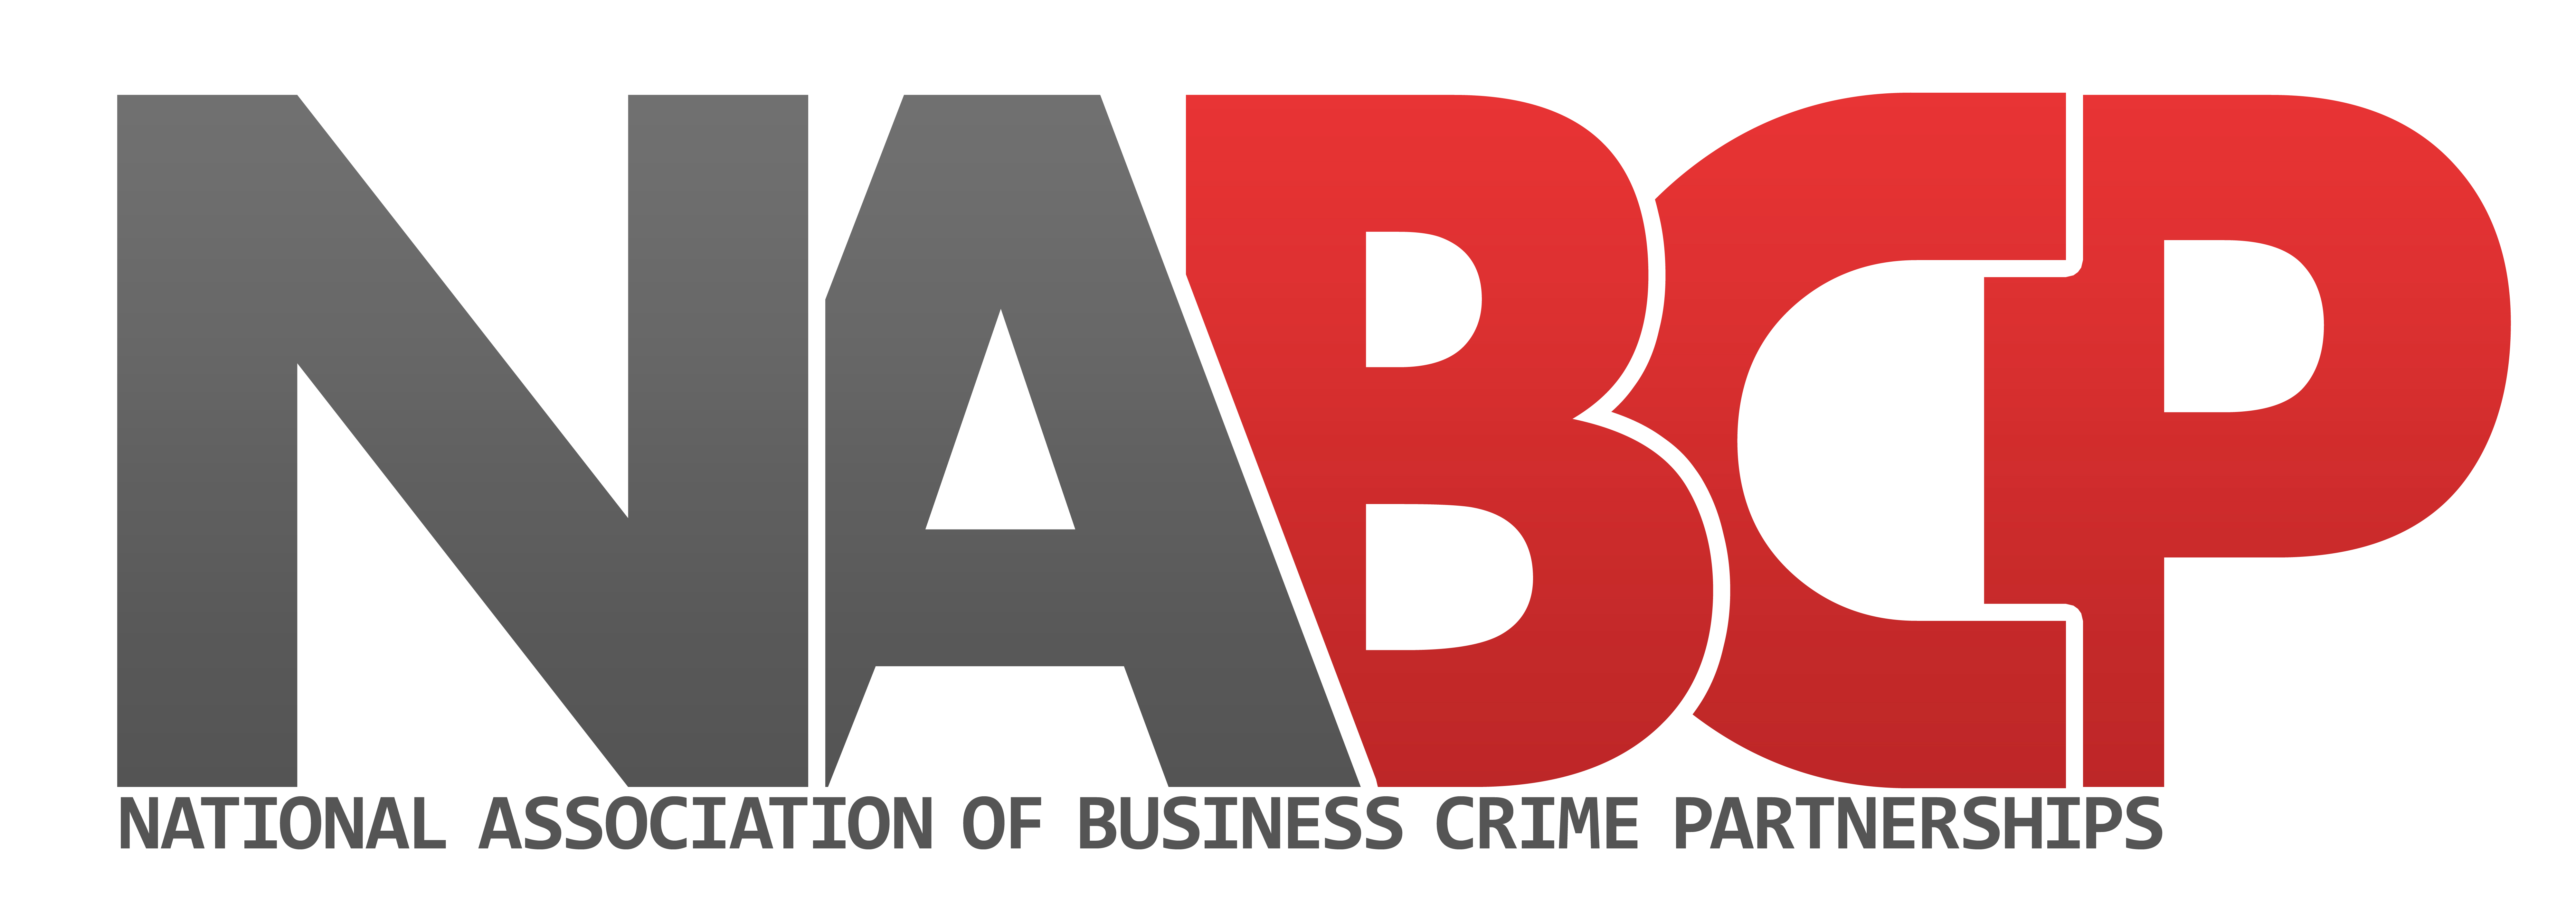 National Association of Business Crime Partnerships